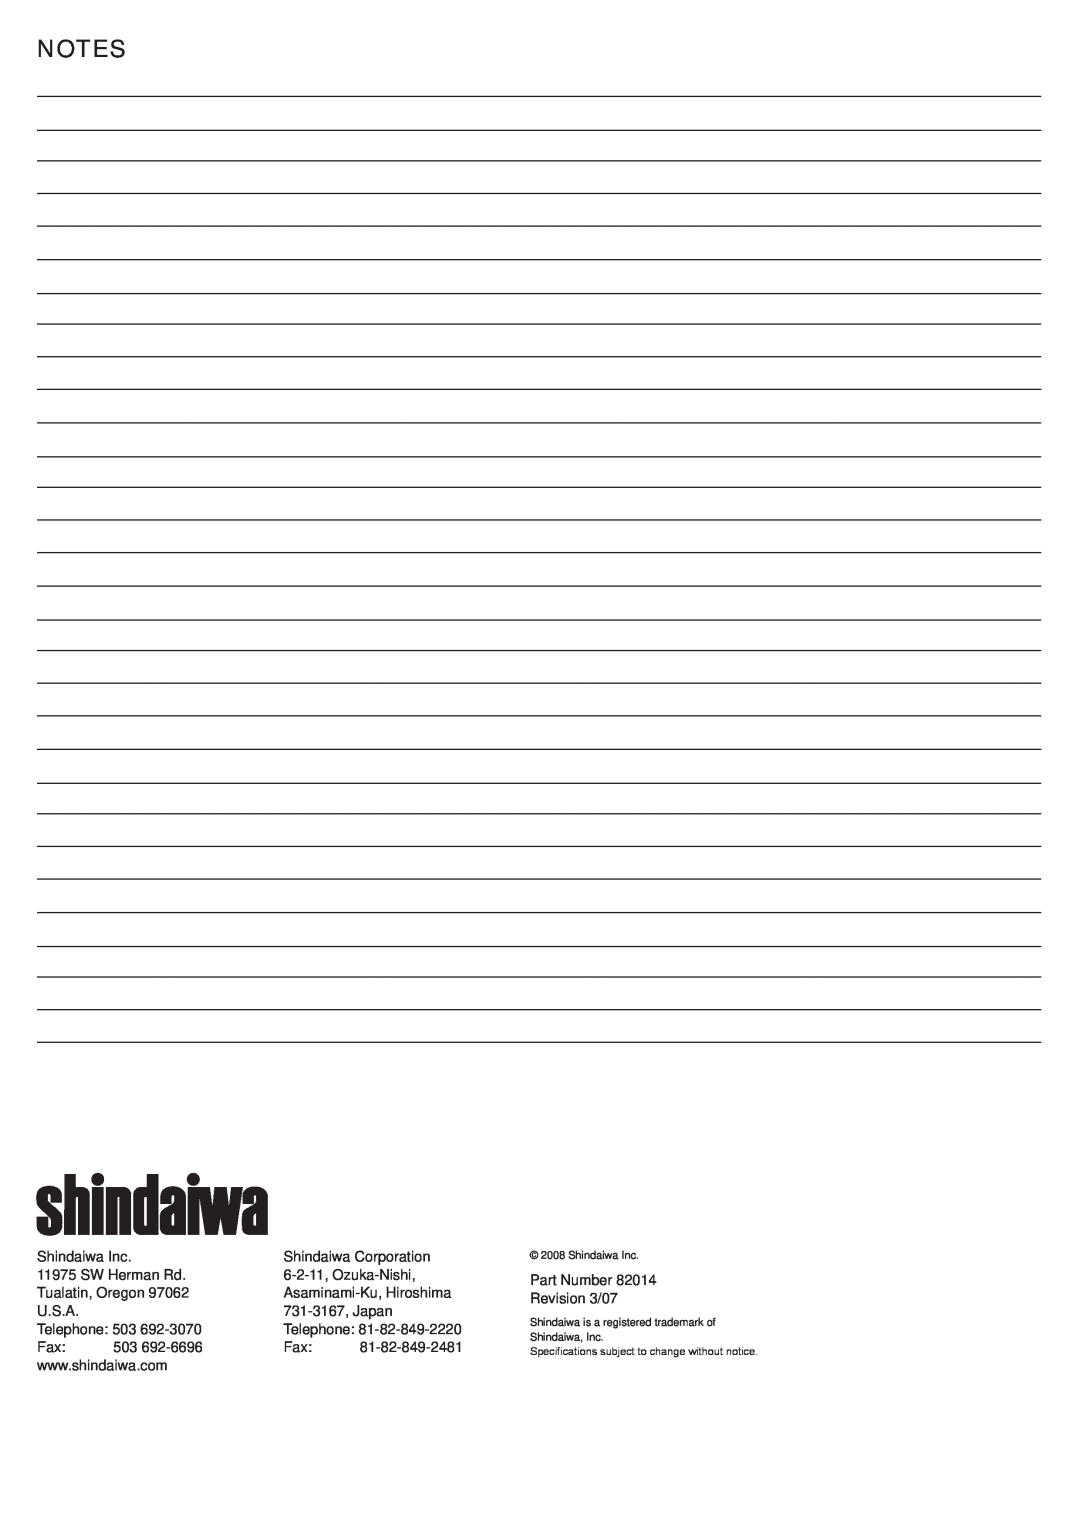 Shindaiwa 82014, T2510X manual Telephone, Shindaiwa Inc, Shindaiwa is a registered trademark of Shindaiwa, Inc 